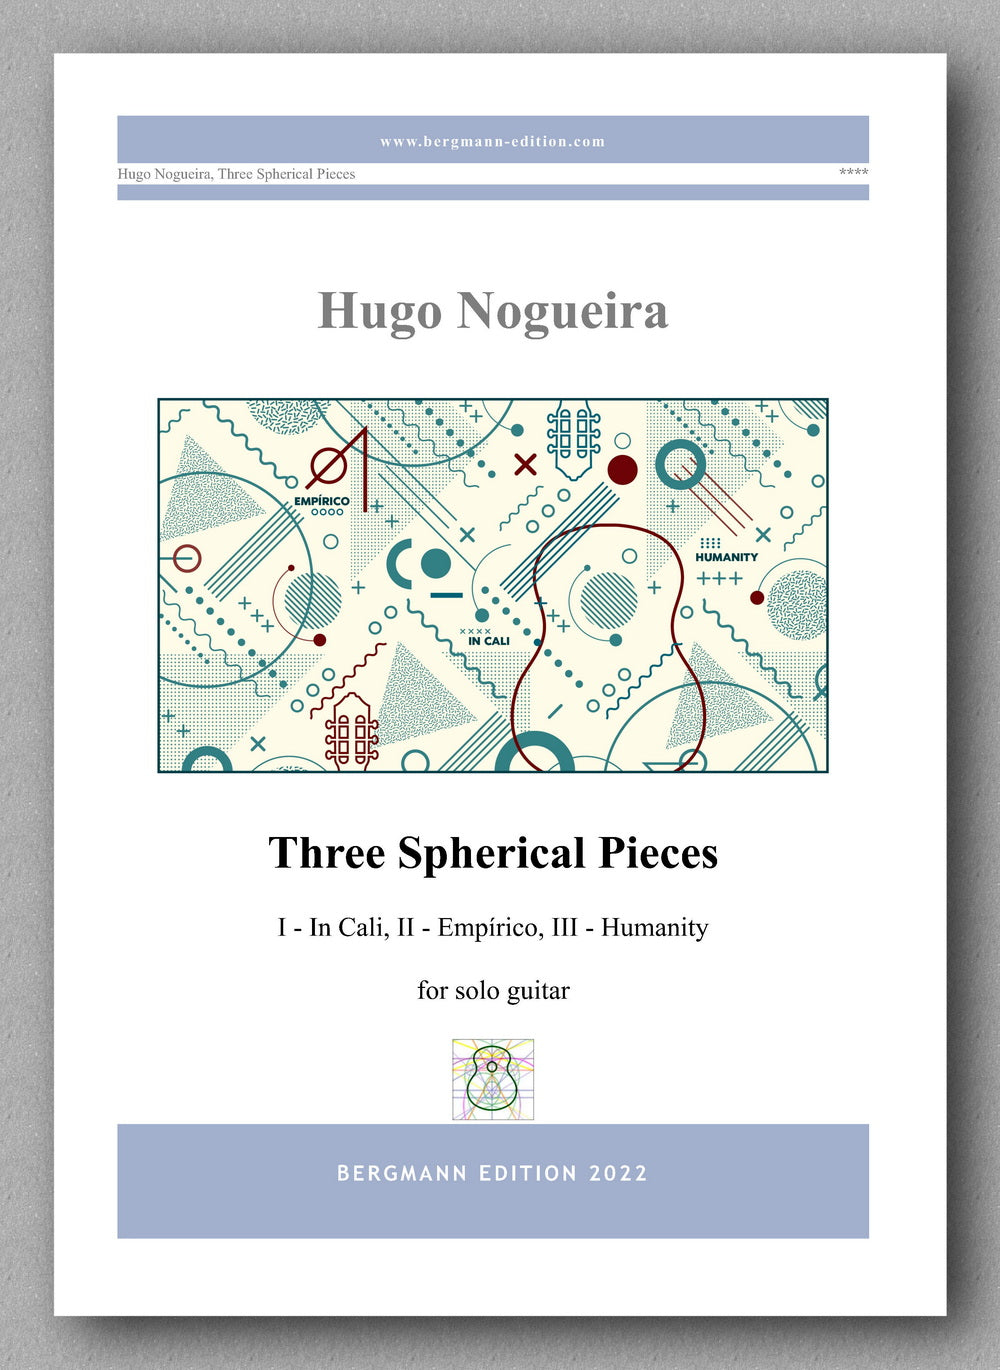 Hugo Nogueira,  Three Spherical Pieces - preveiw of the cover